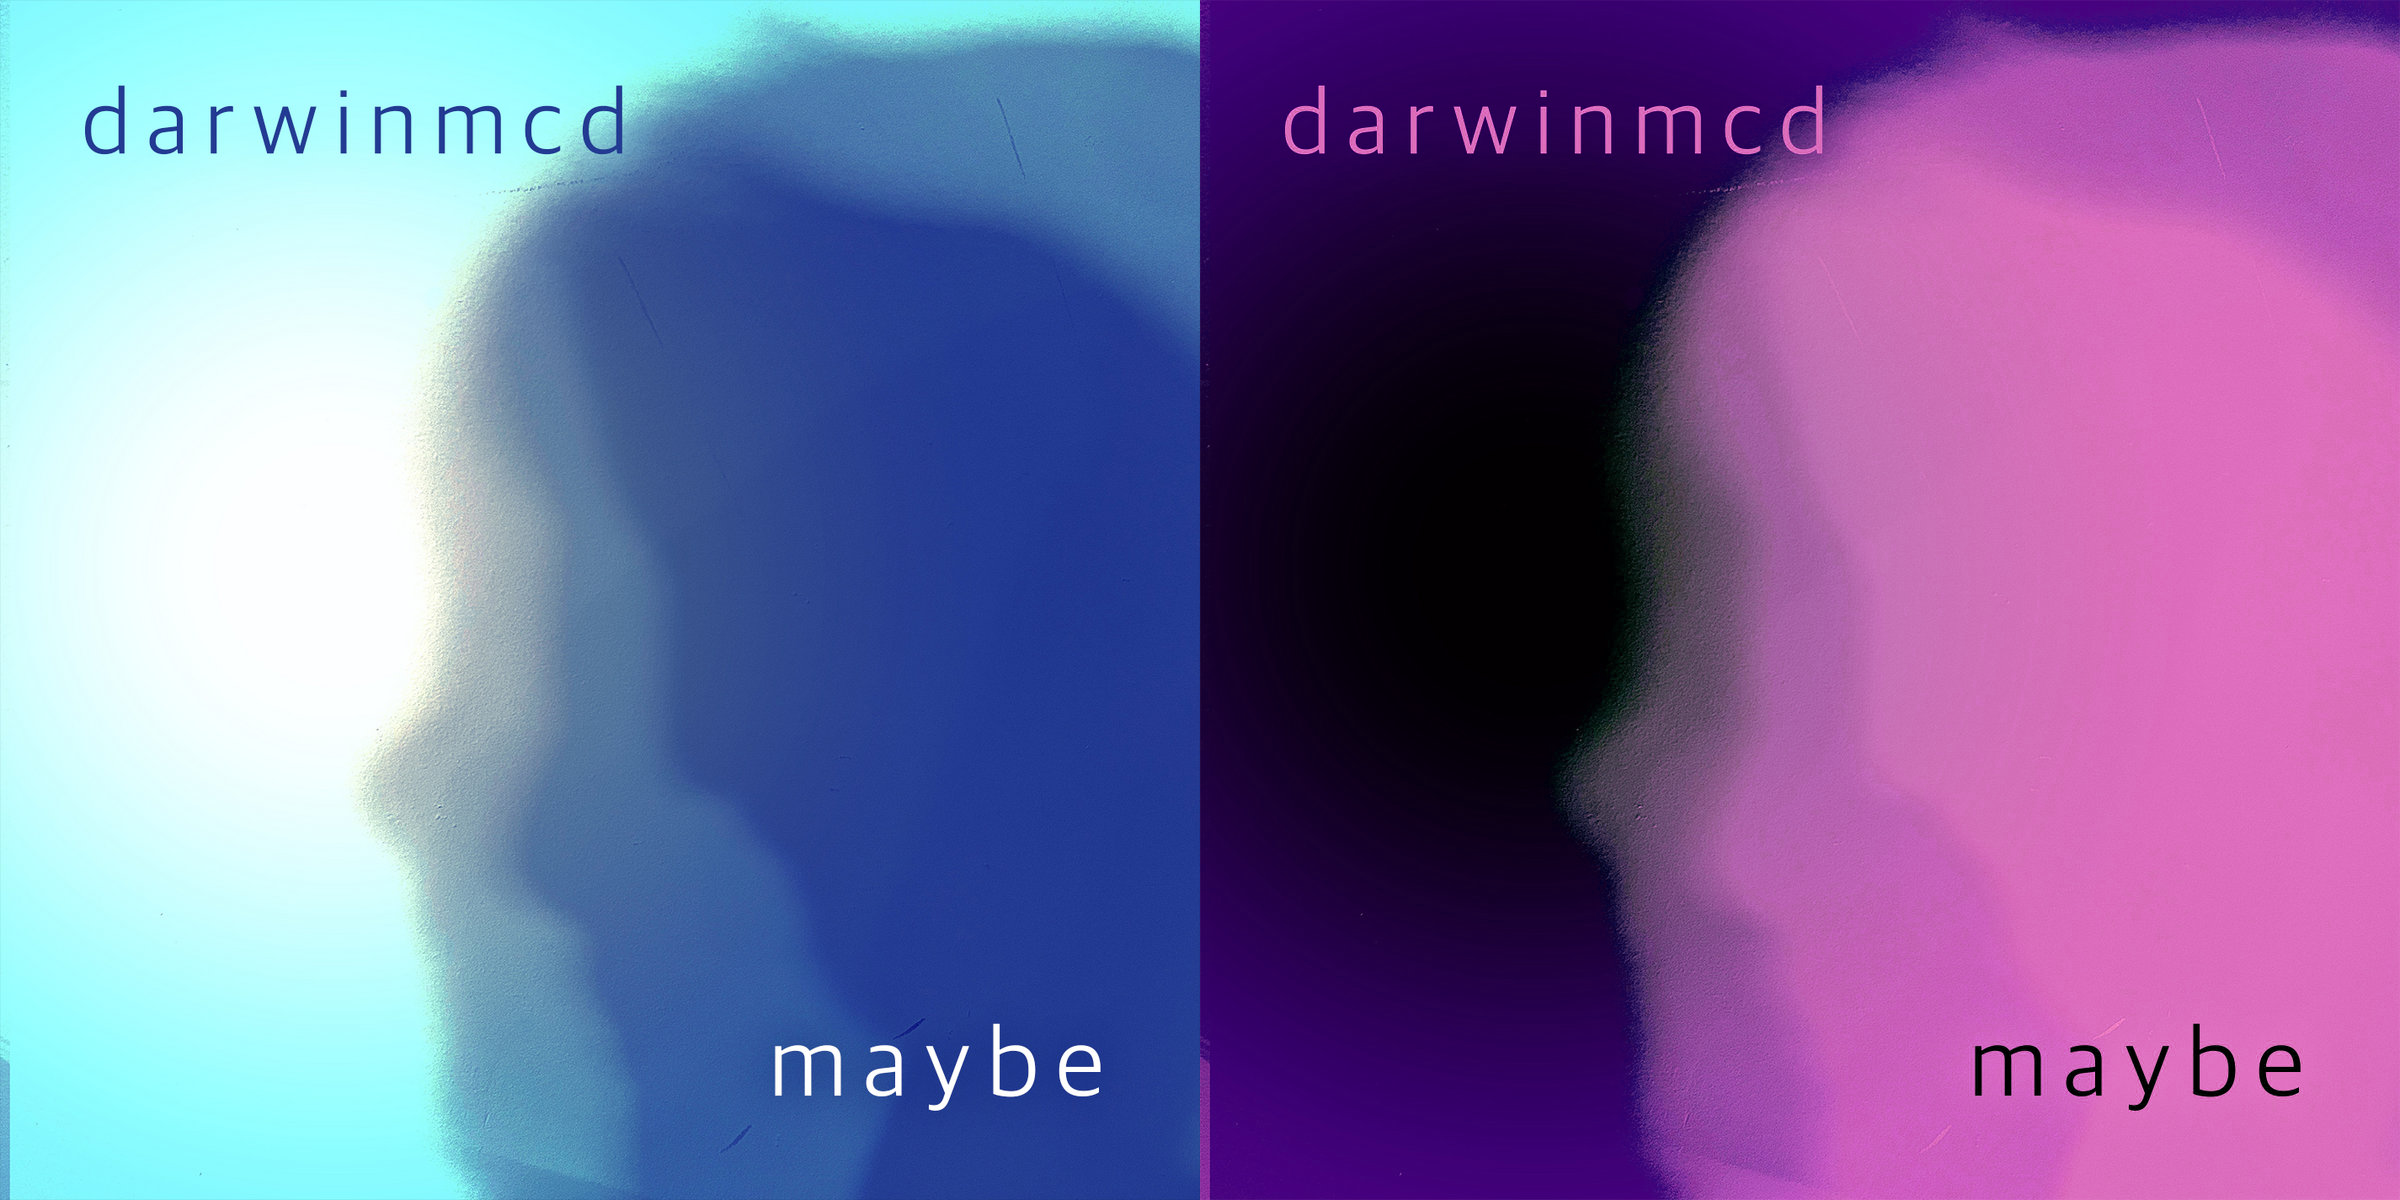 Album art for Darwinmcd's new release, "Maybe."